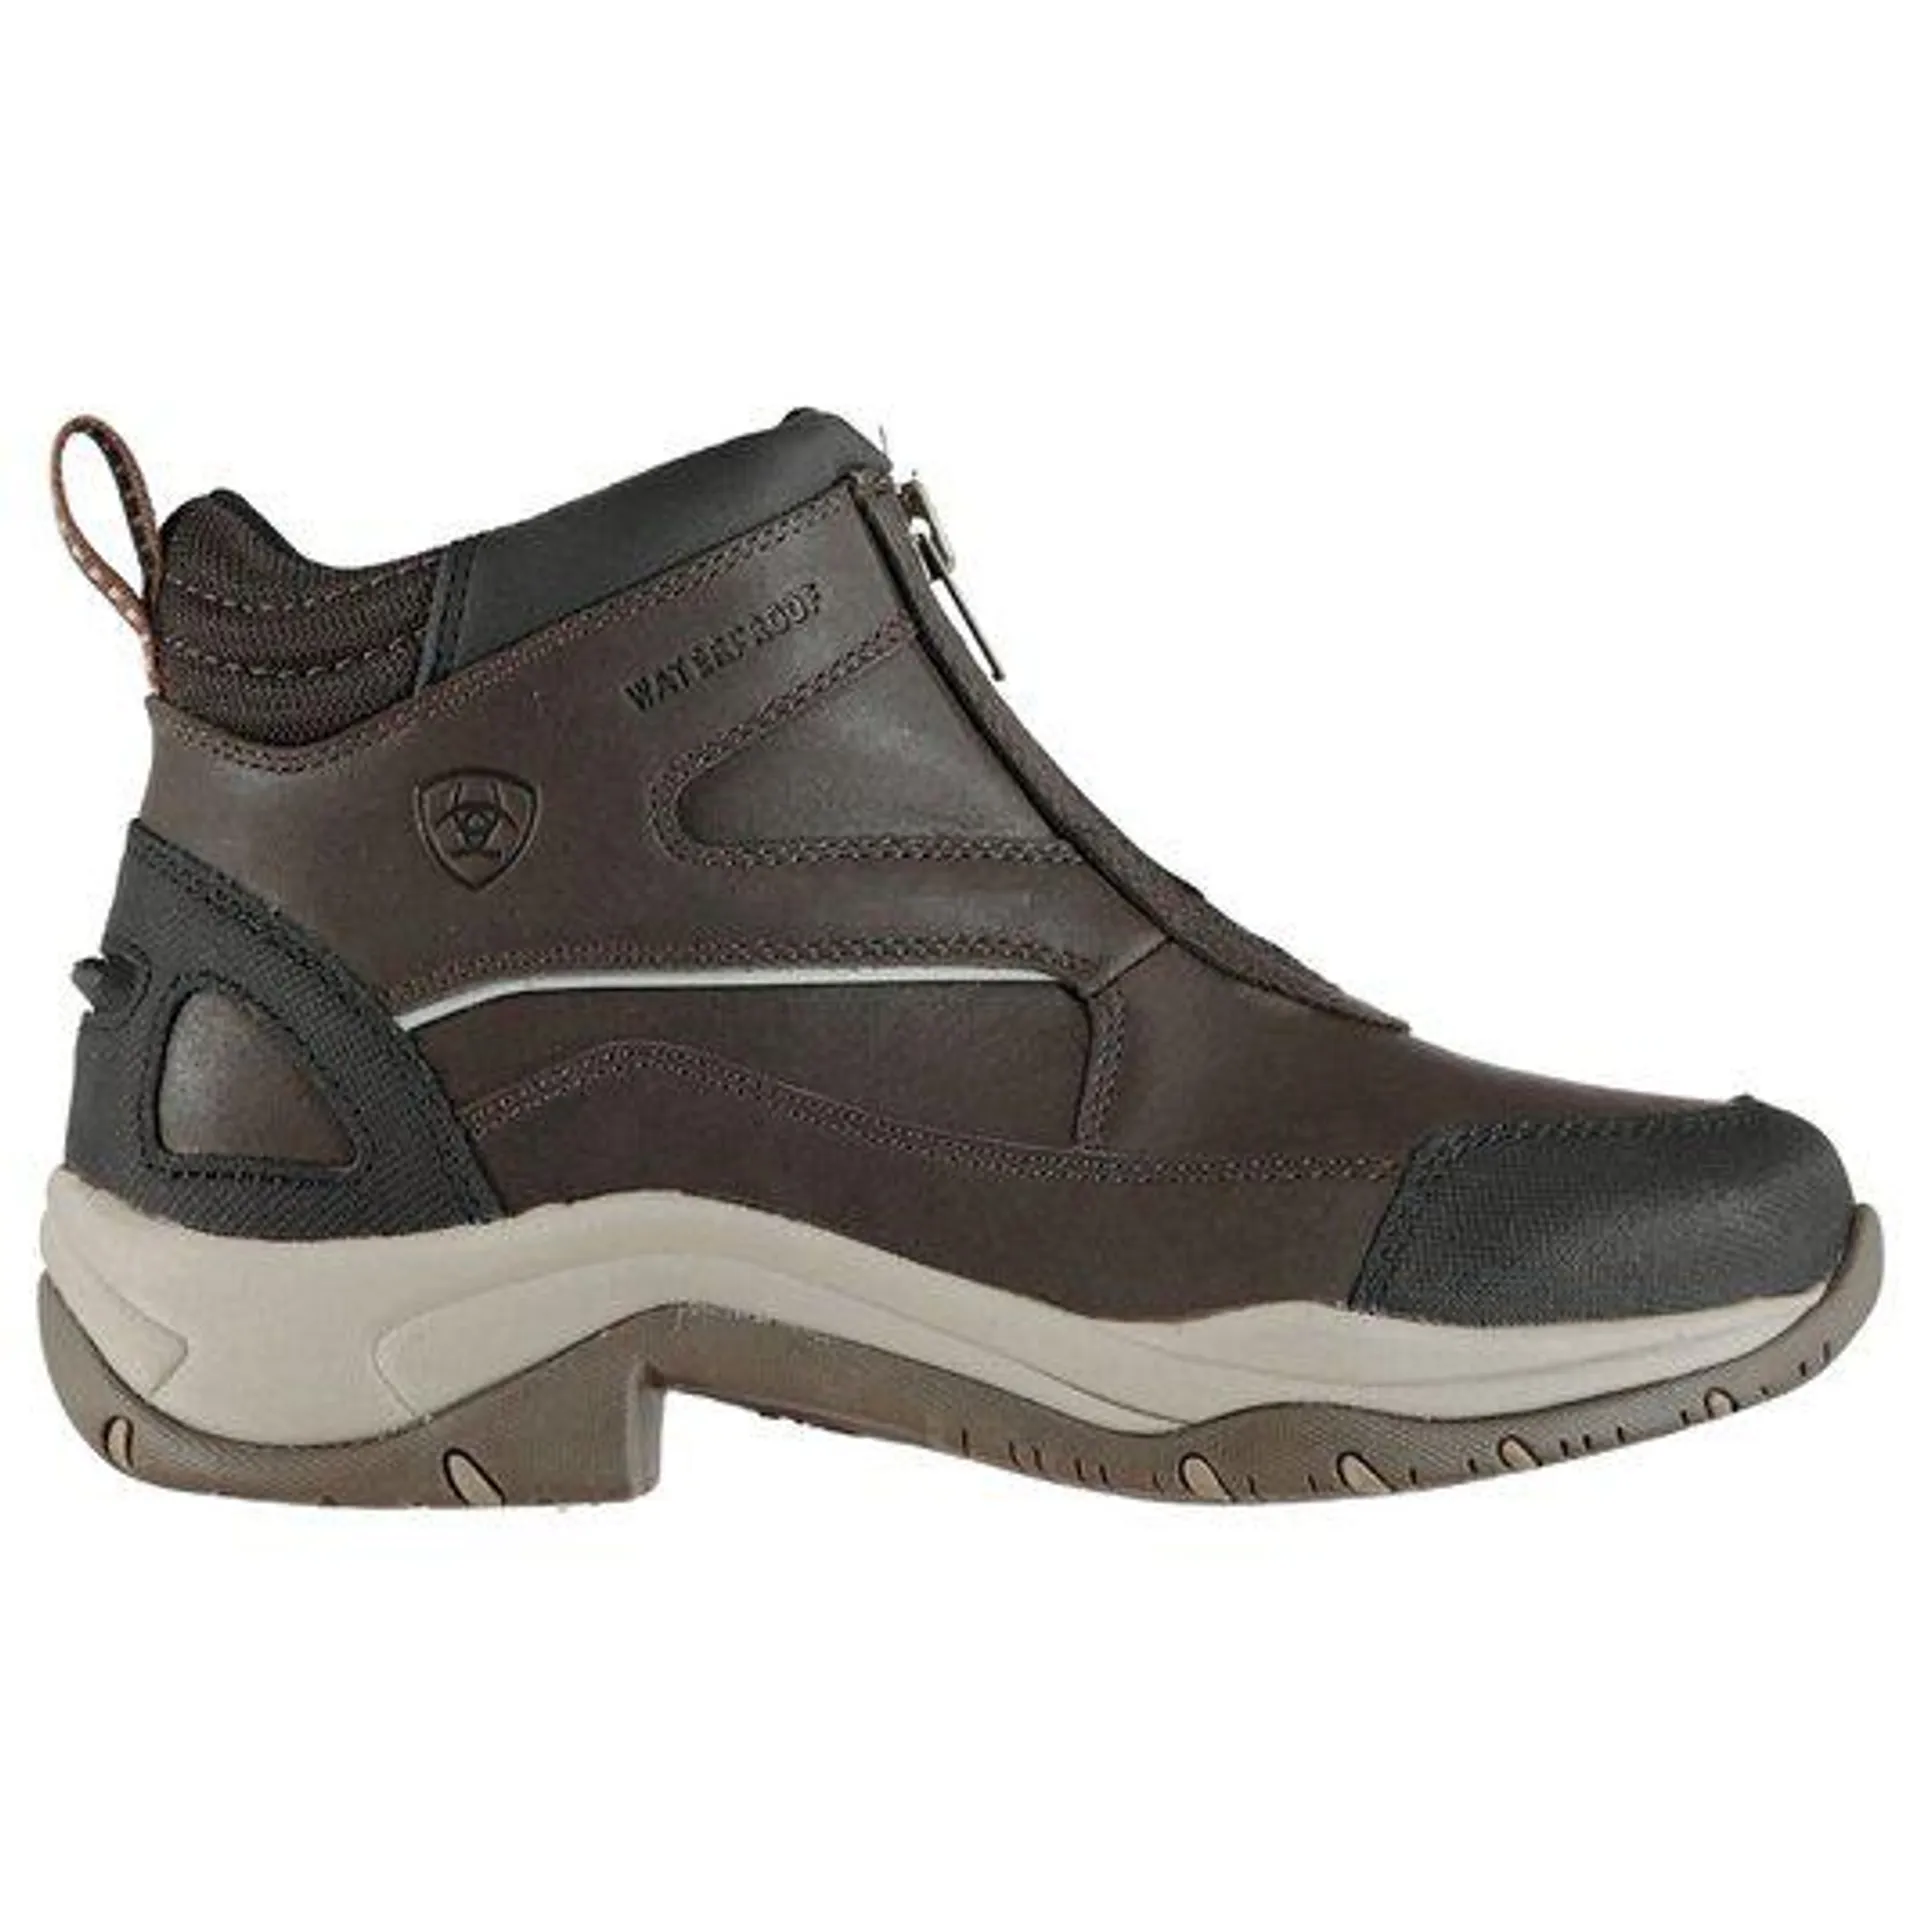 Ariat Telluride Zip H2O Ladies Boots - Dark Brown